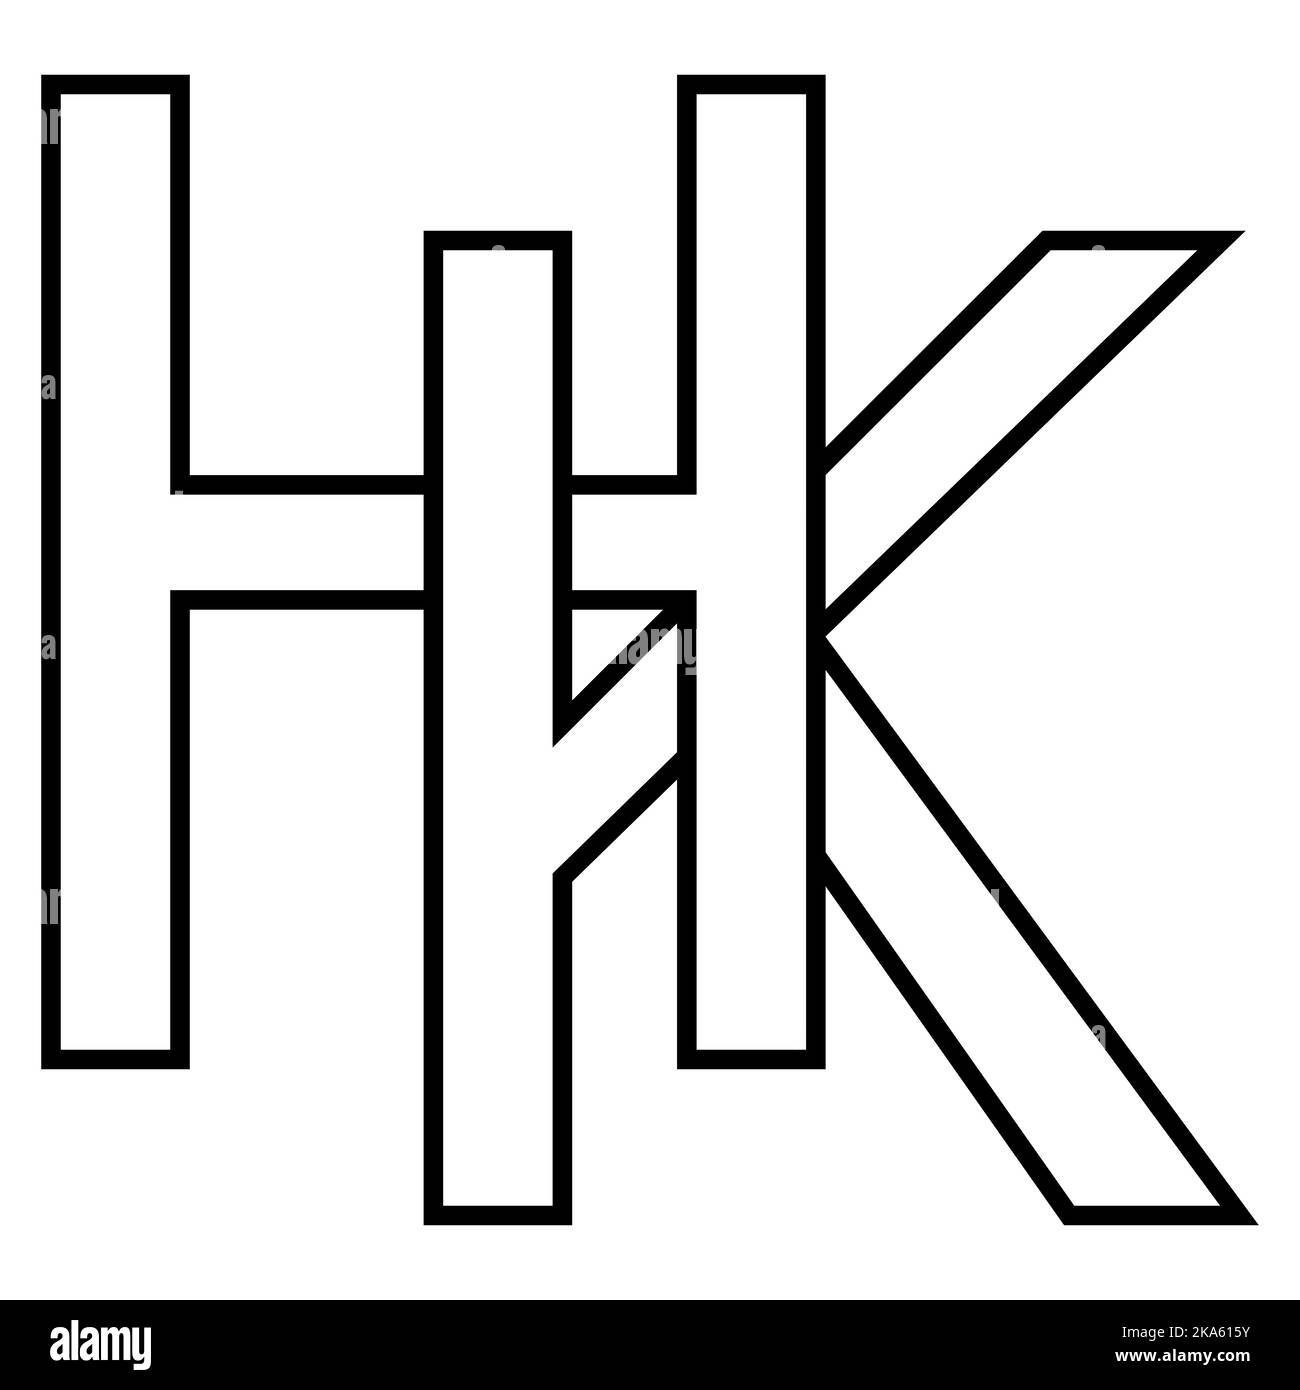 Logo sign hk kh icon nft, interlaced letters k h Stock Vector